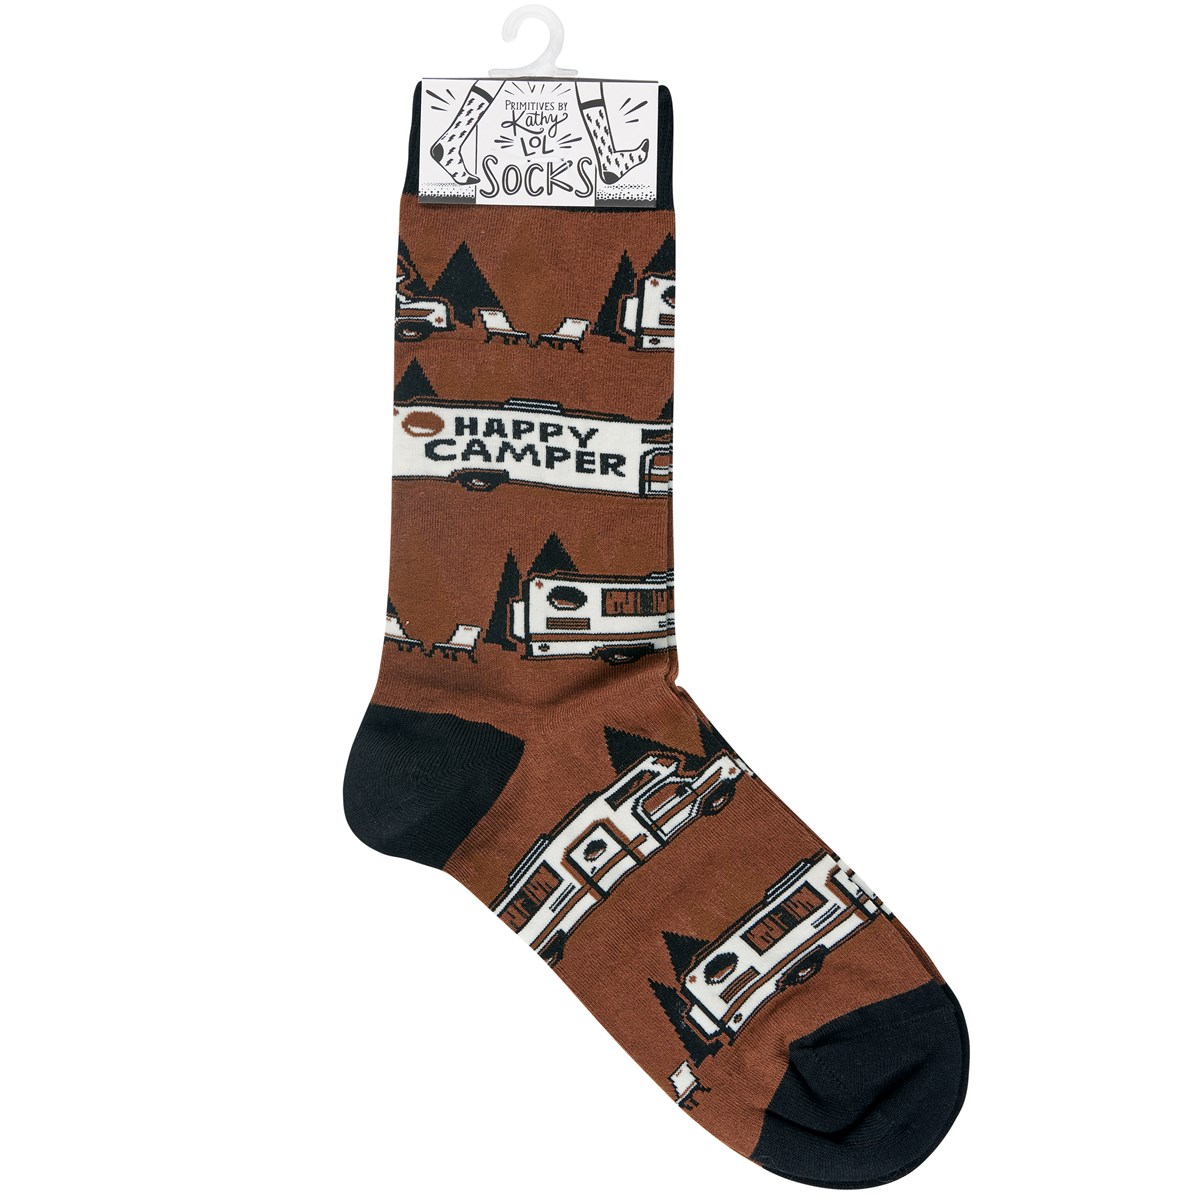 Happy Camper Socks - Cotton, Nylon, Spandex